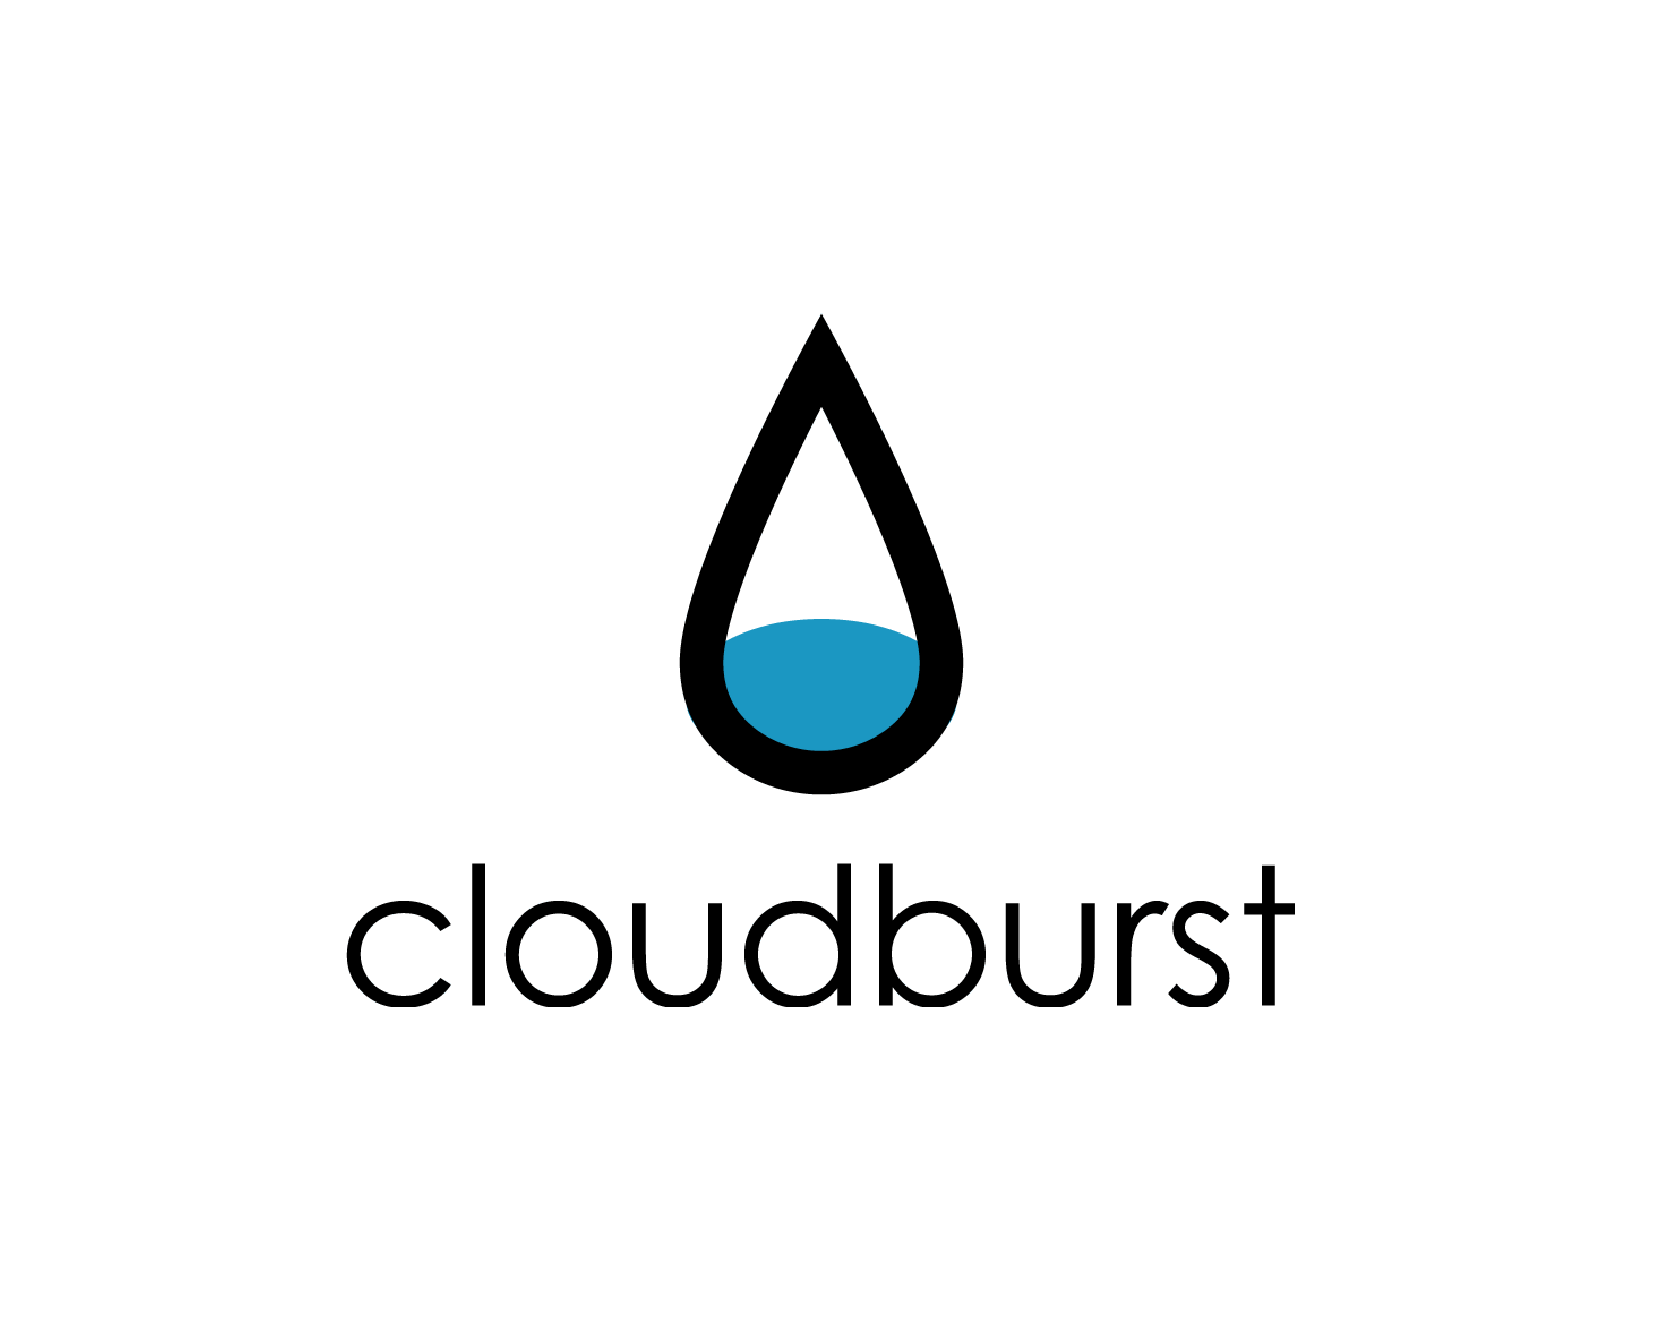 Cloudburst Foundation